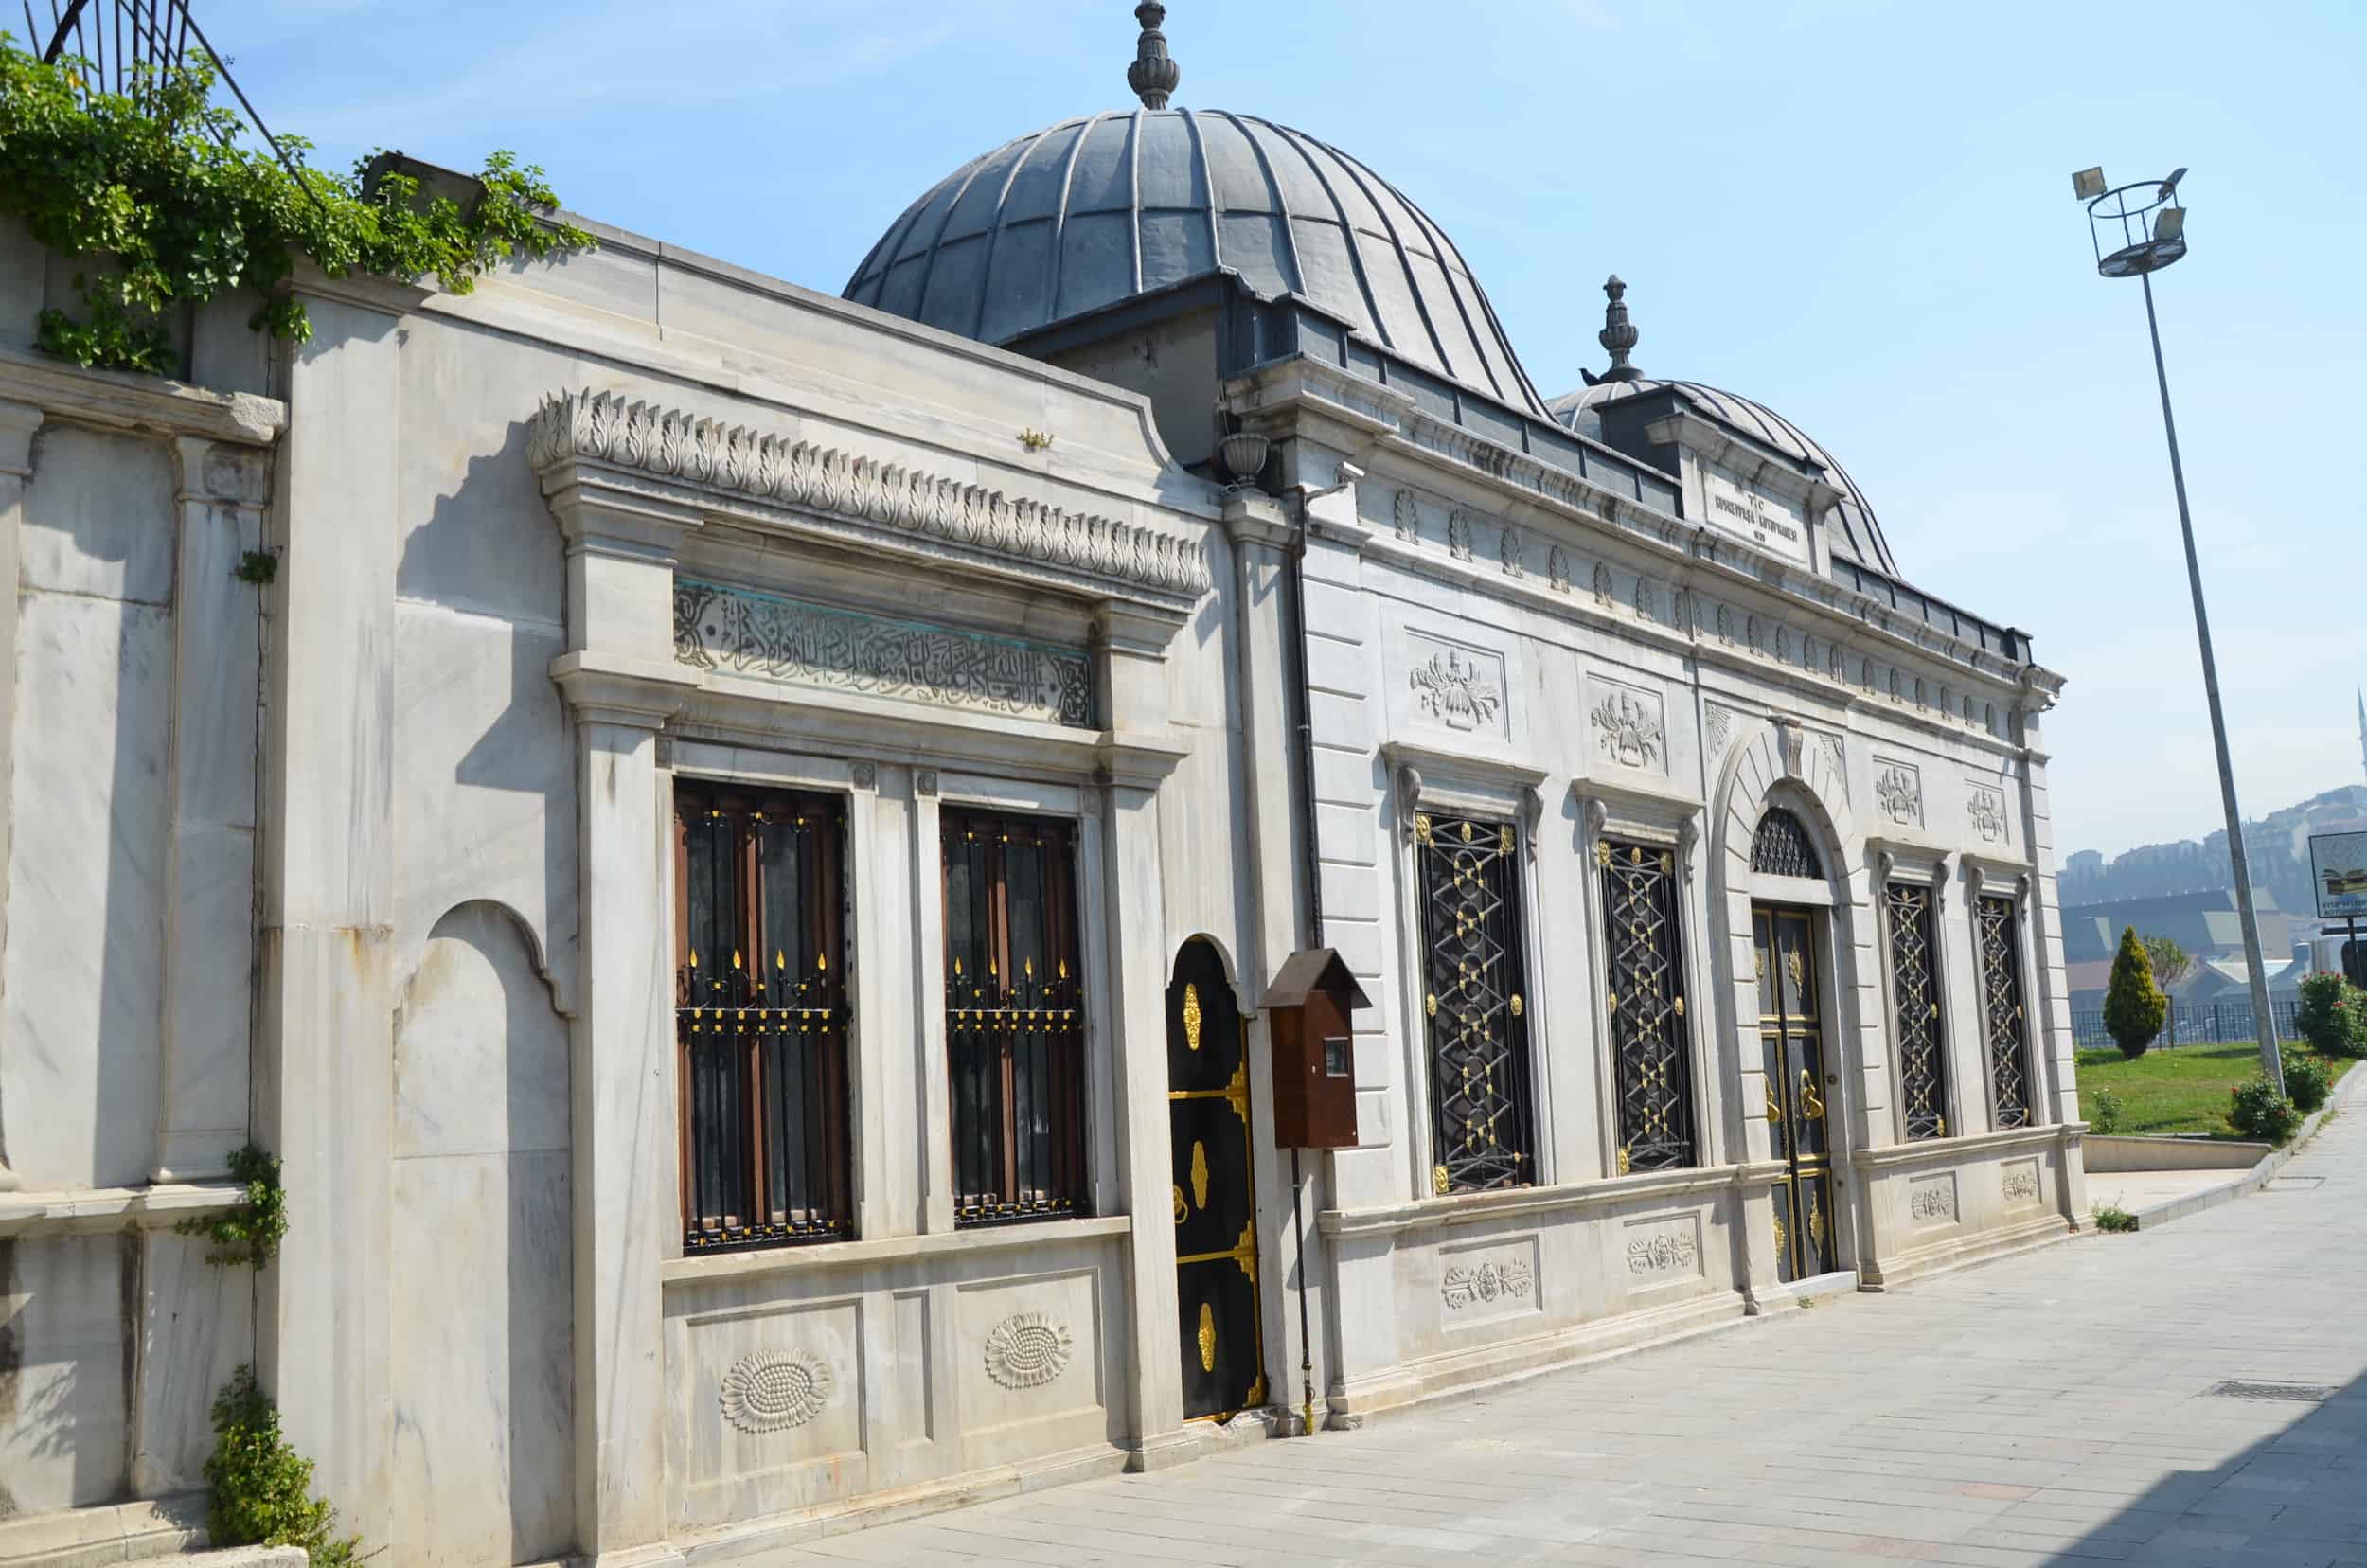 Hüsrev Pasha Library on the Cülus Yolu in Eyüp, Istanbul, Turkey